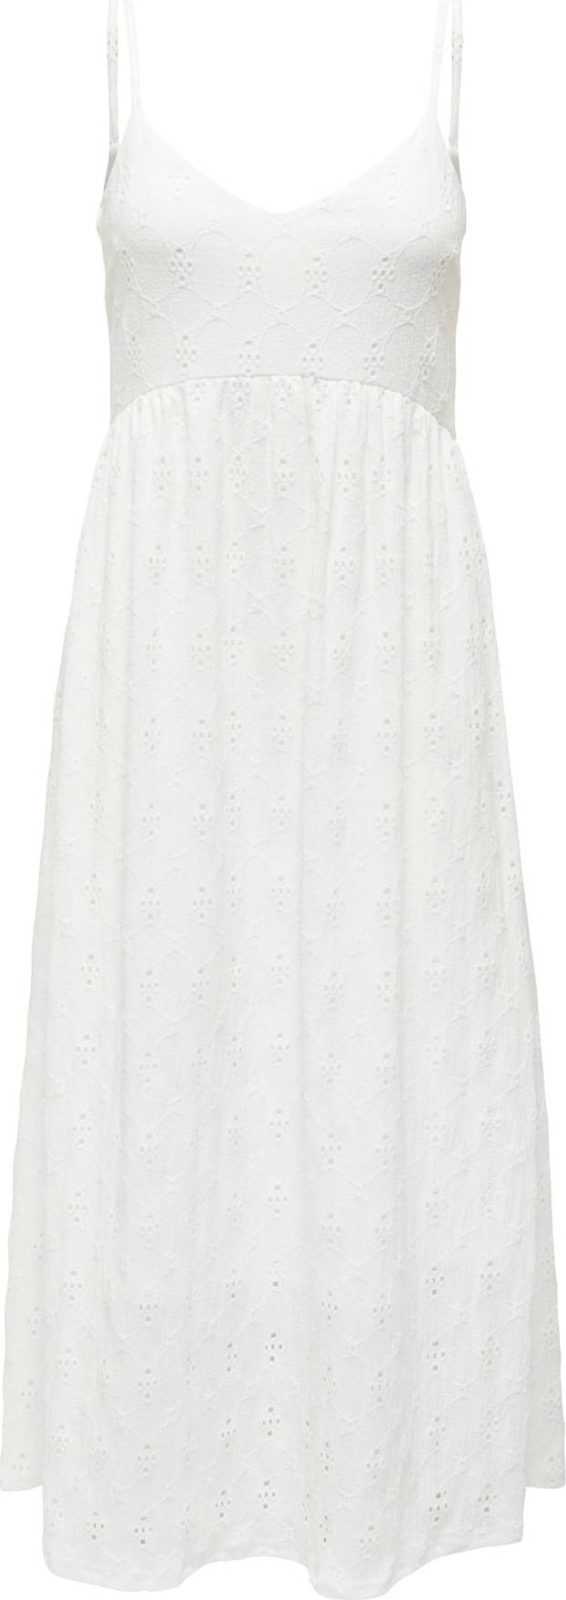 ONLY Letní šaty 'ELLEN' bílá